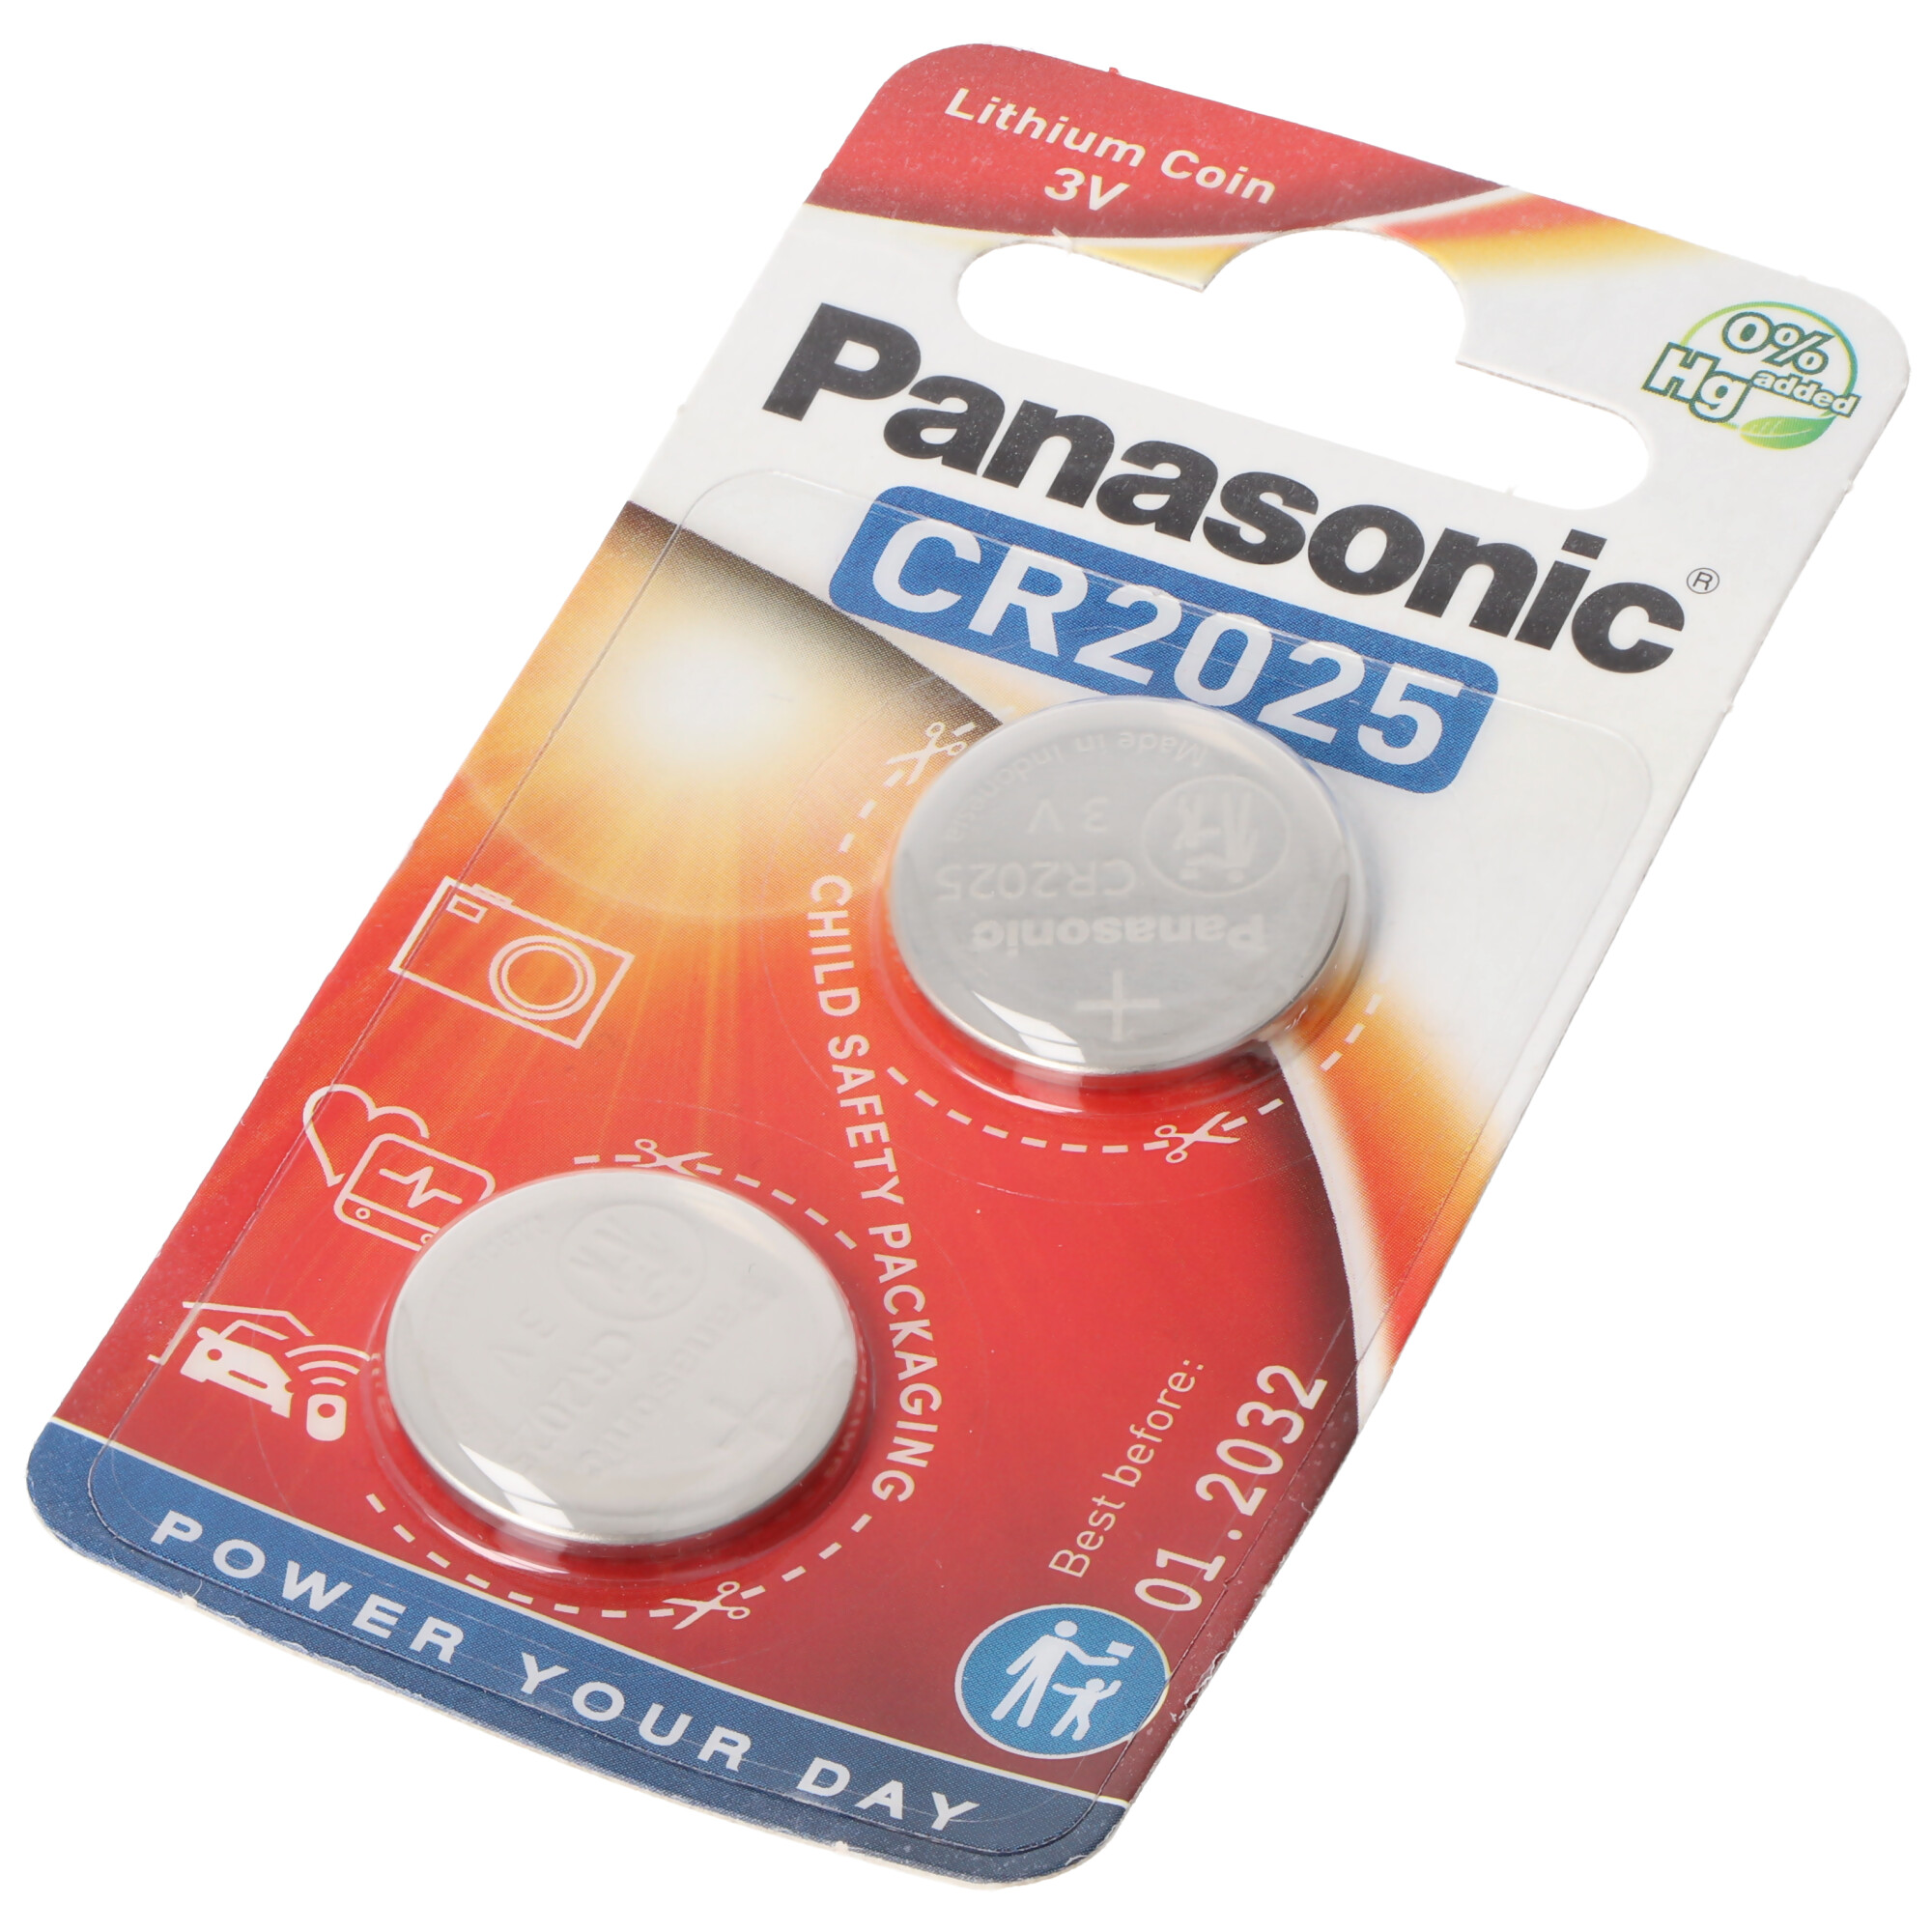 Panasonic Batterie Lithium, Knopfzelle, CR2025, 3V Electronics, Lithium Power, Retail Blister (2-Pack)